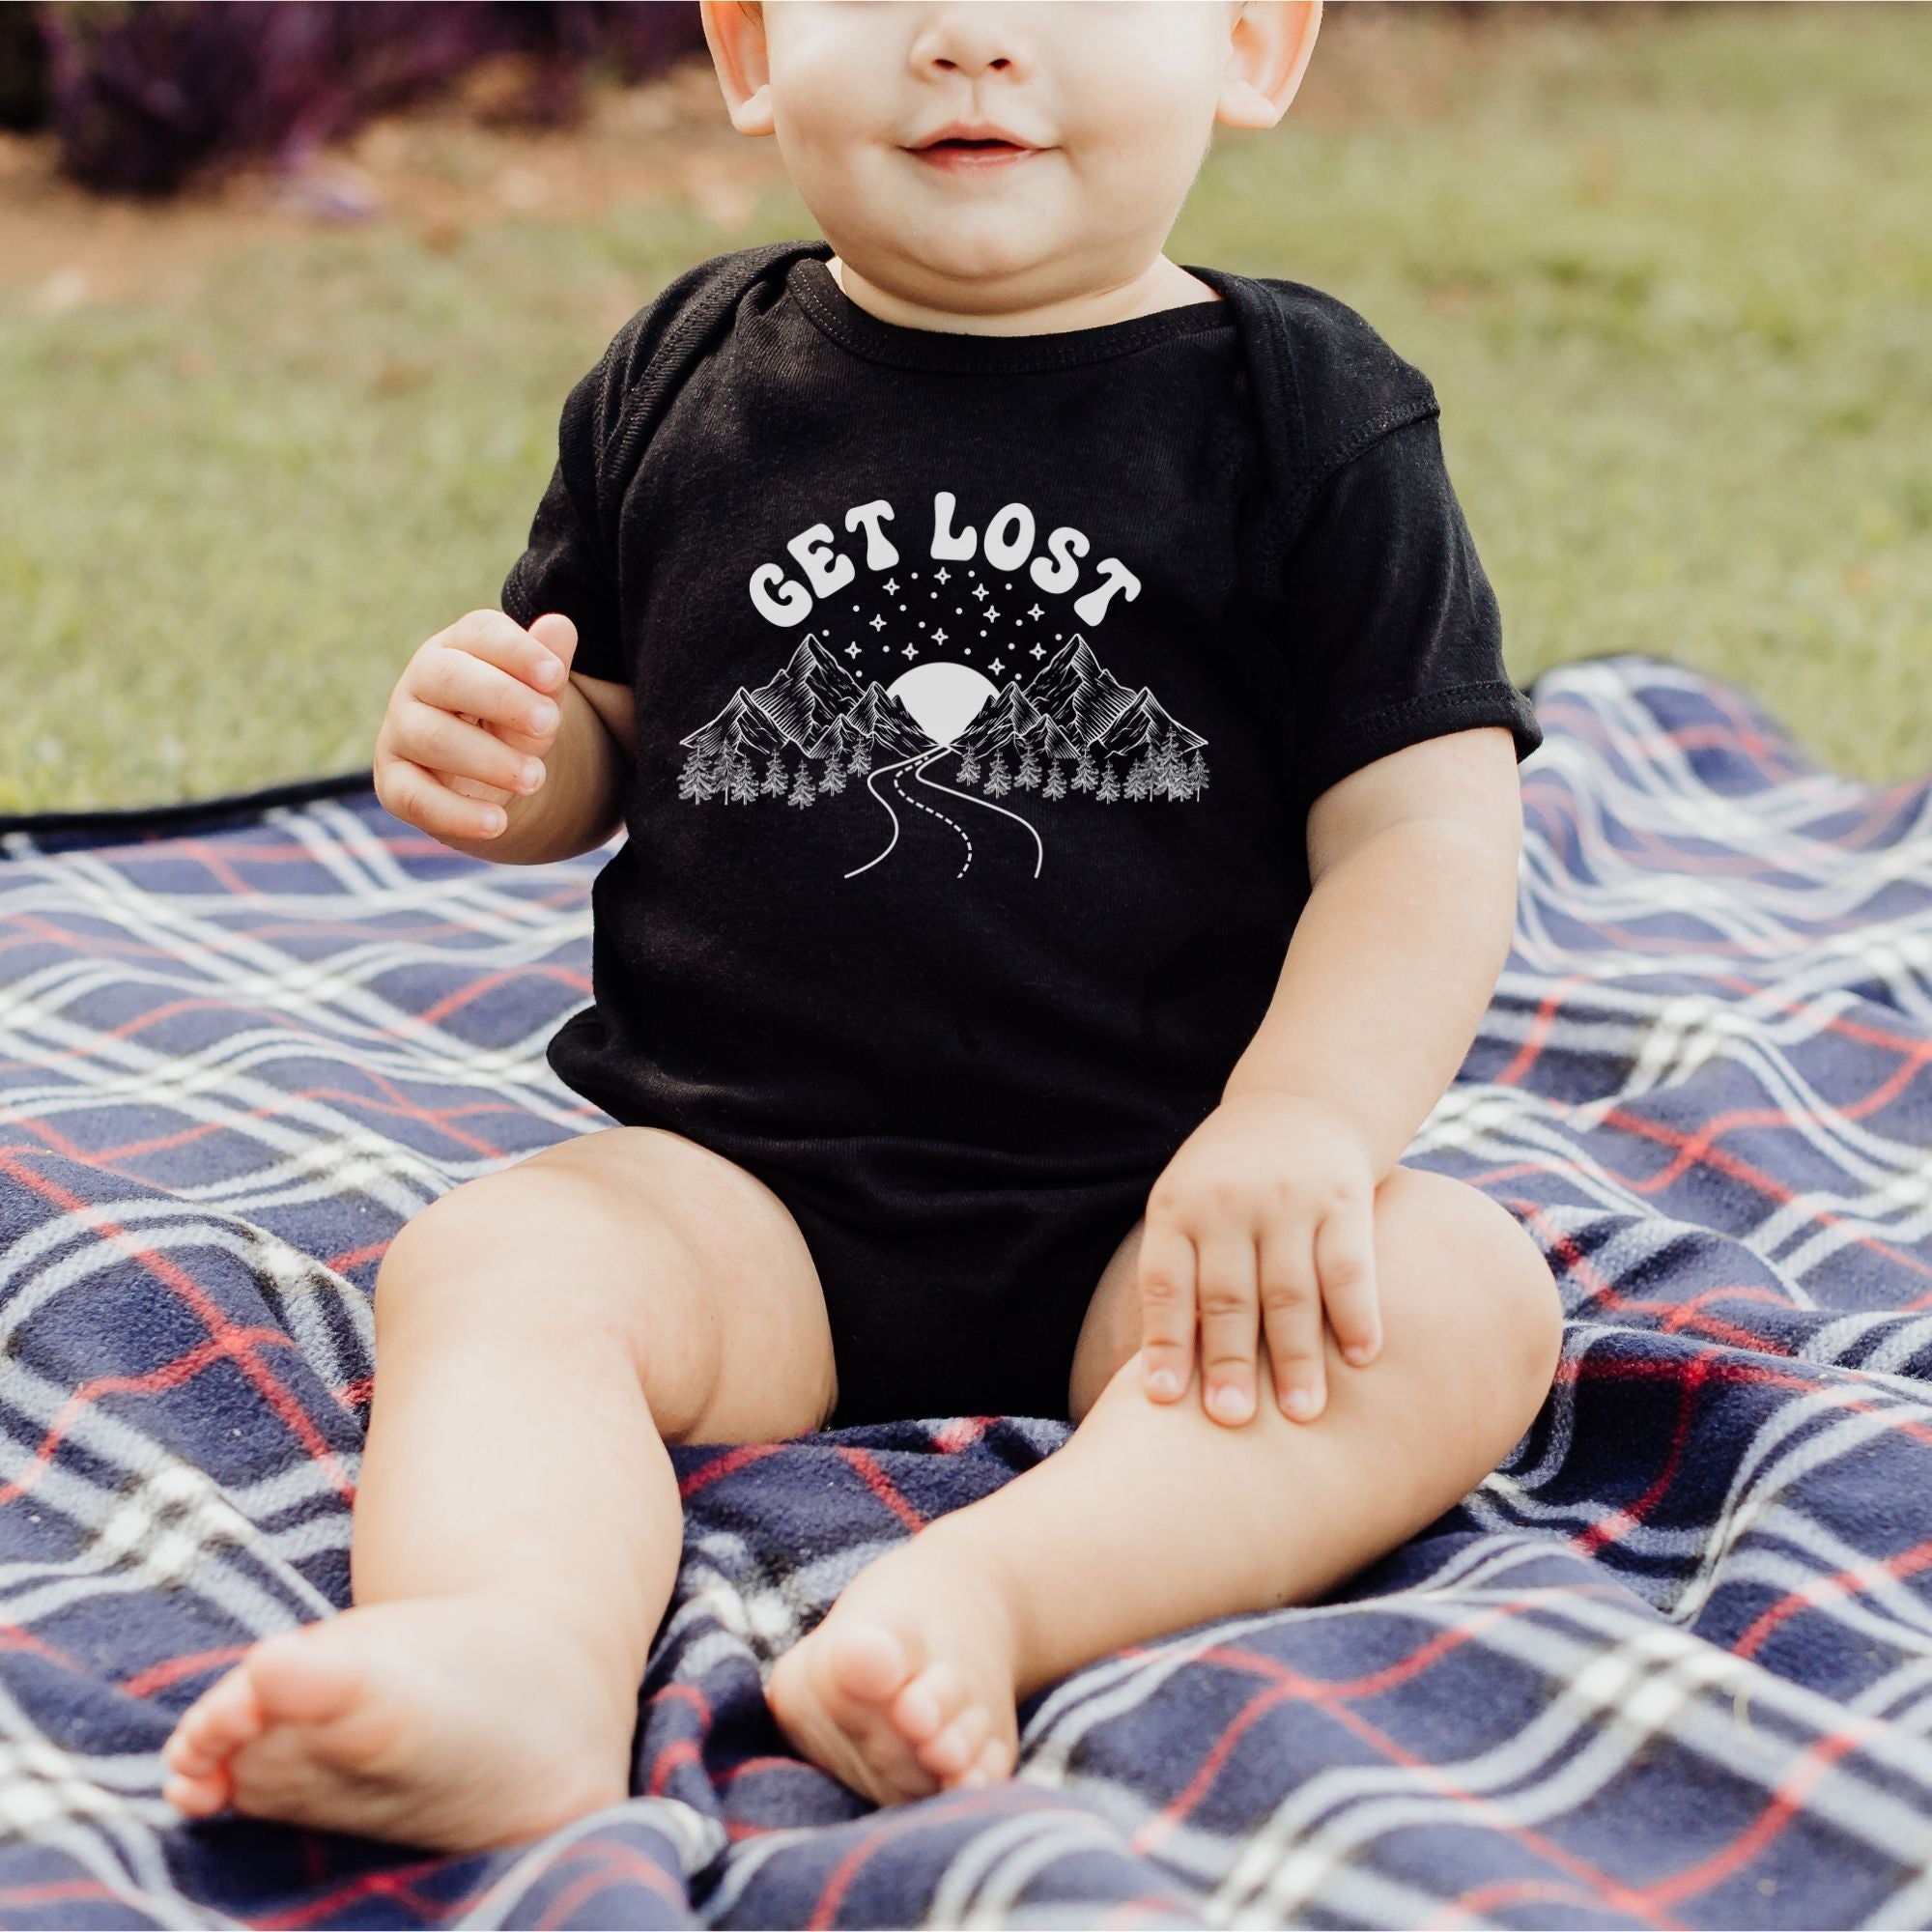 Get Lost Baby Bodysuit or Tshirt *UNISEX FIT*-Baby & Toddler-208 Tees Wholesale, Idaho